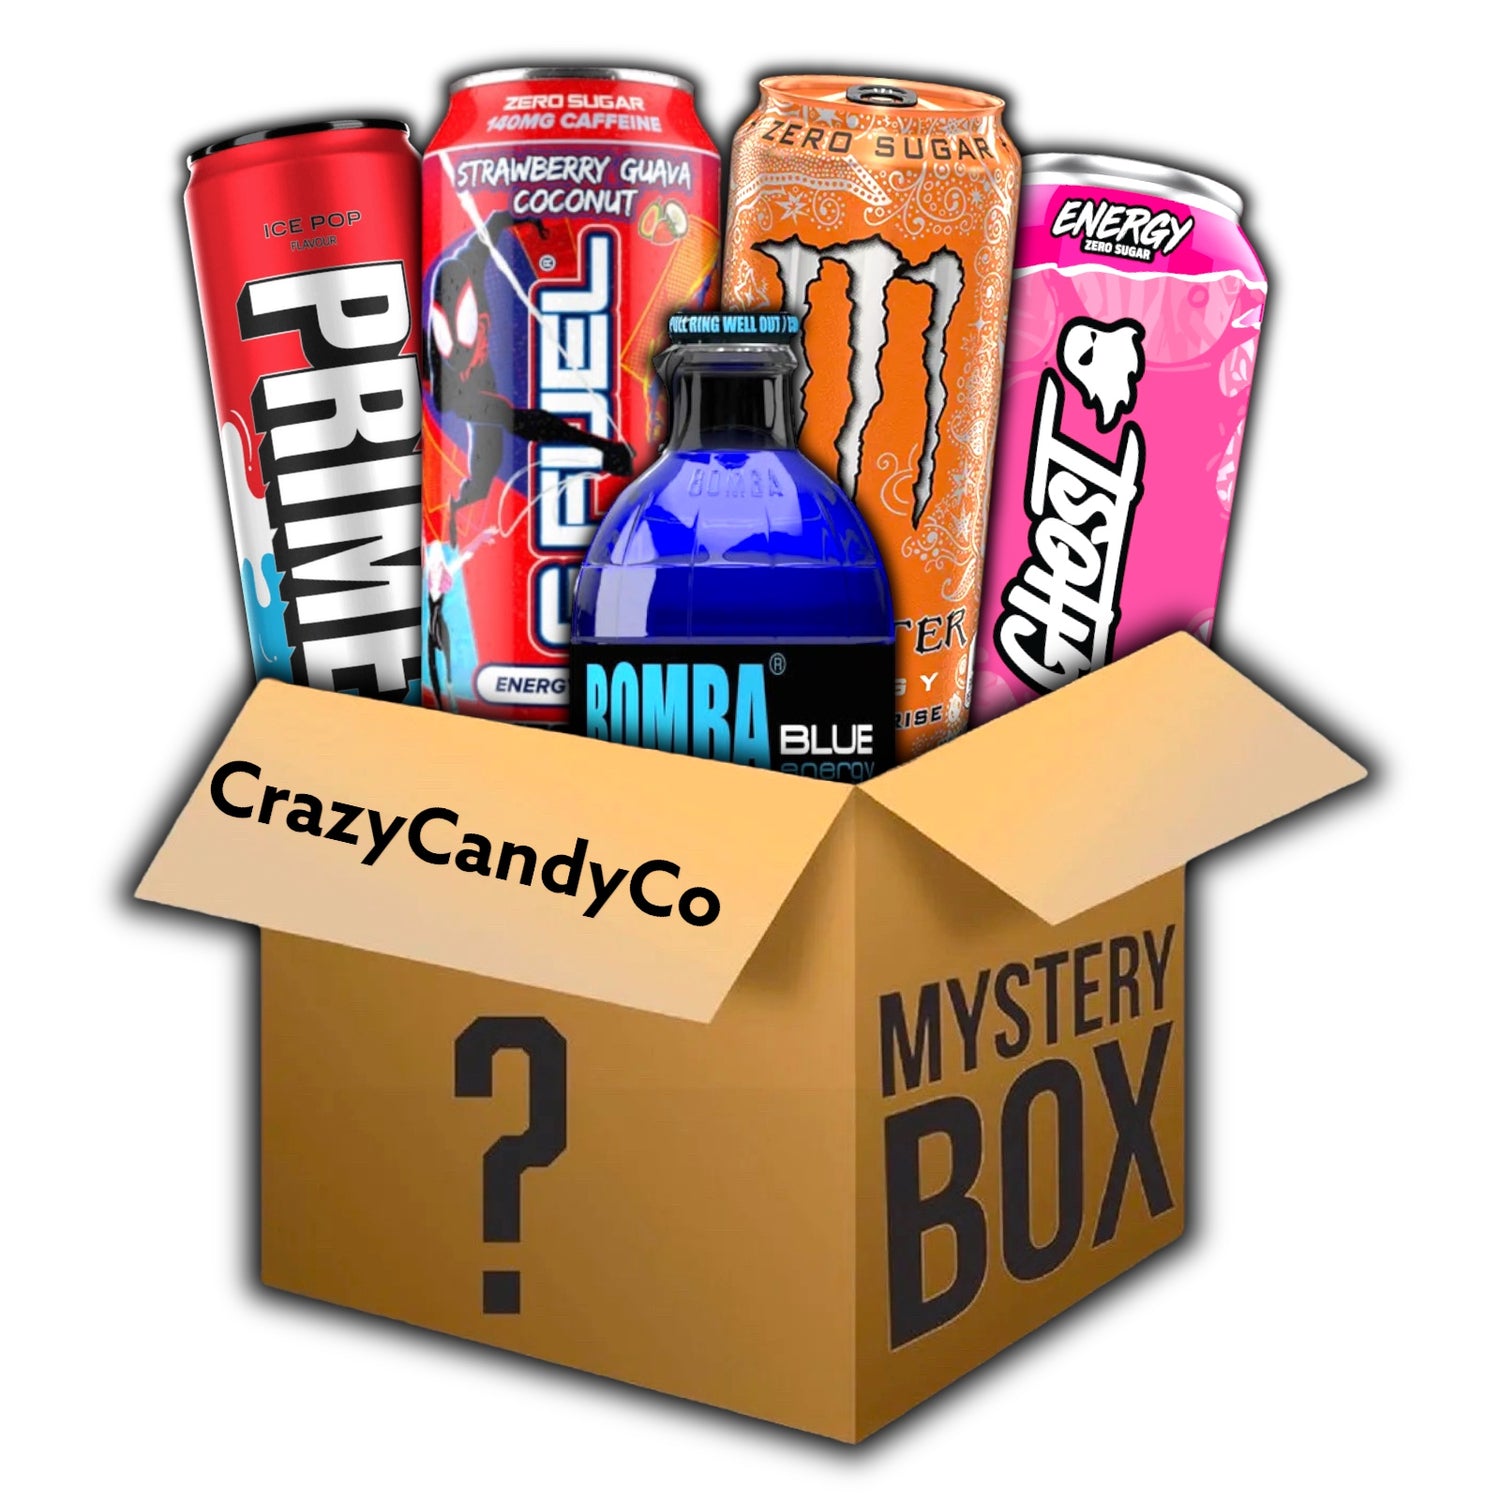 The ENERGY Drinks Mystery Box!!